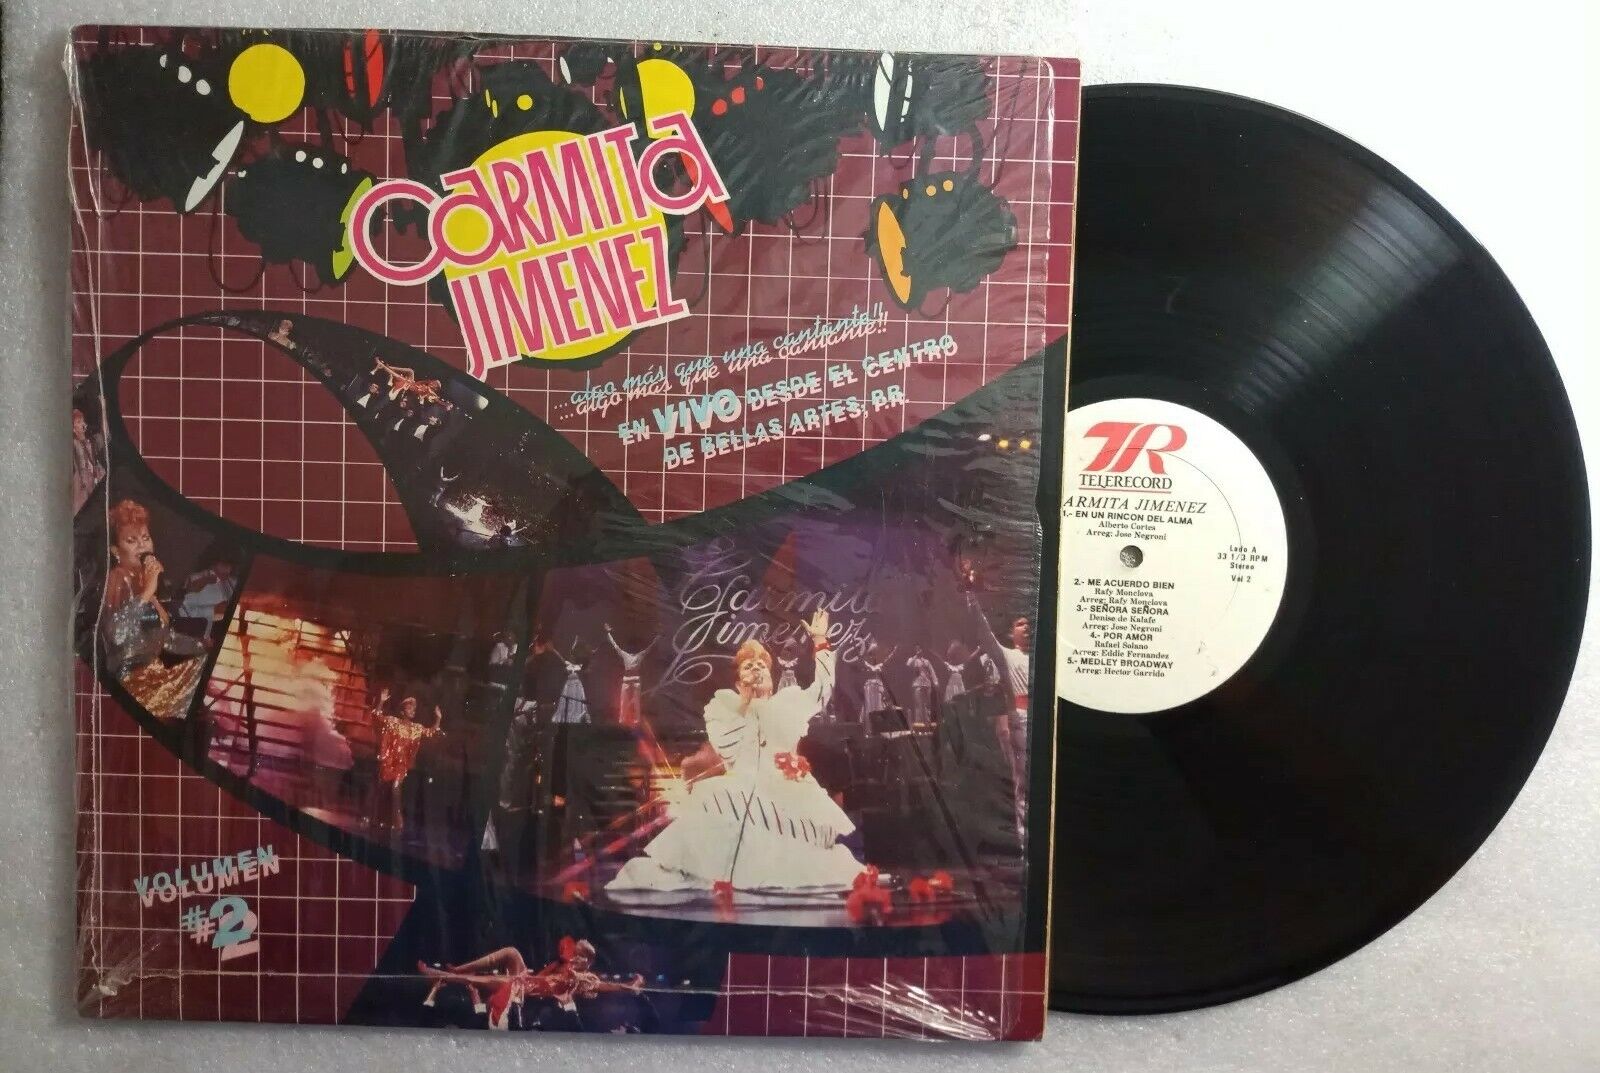 Carmita Jimenez Algo mas Que una Cantante   Vol # 2 TELRECORD 004 LP VG+ LP#0496